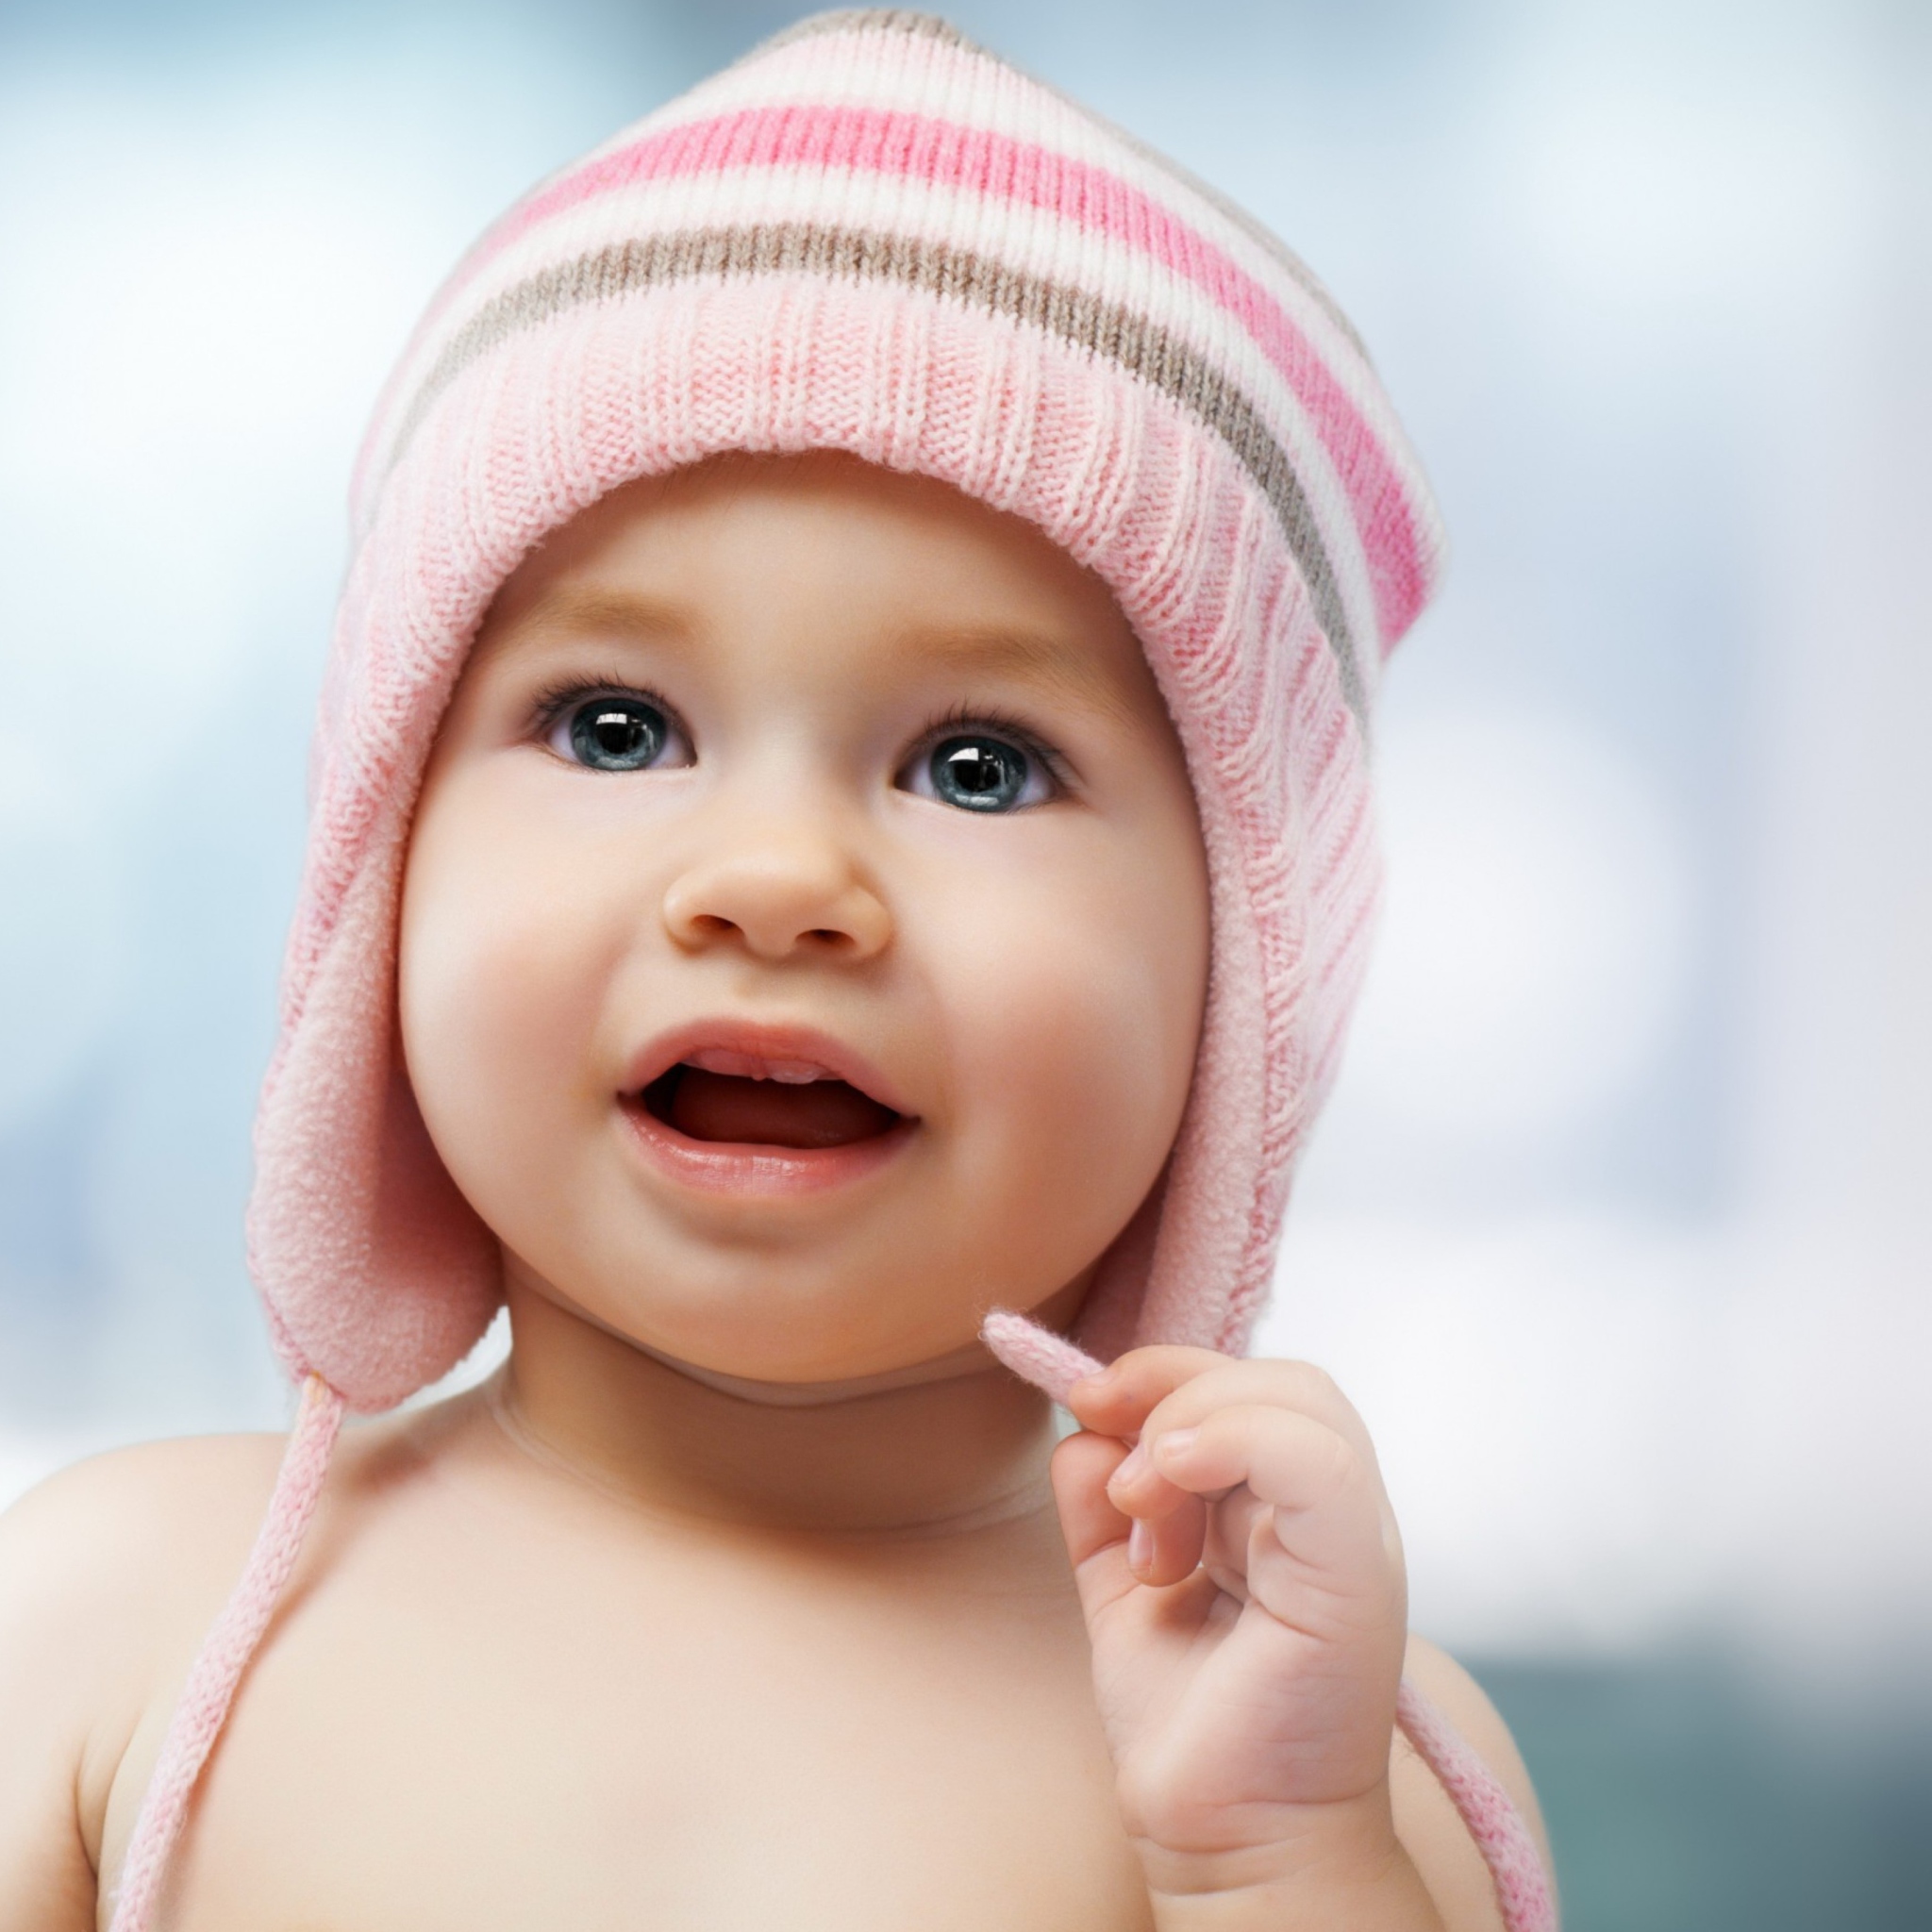 Sweet Baby In Pink Hat wallpaper 2048x2048